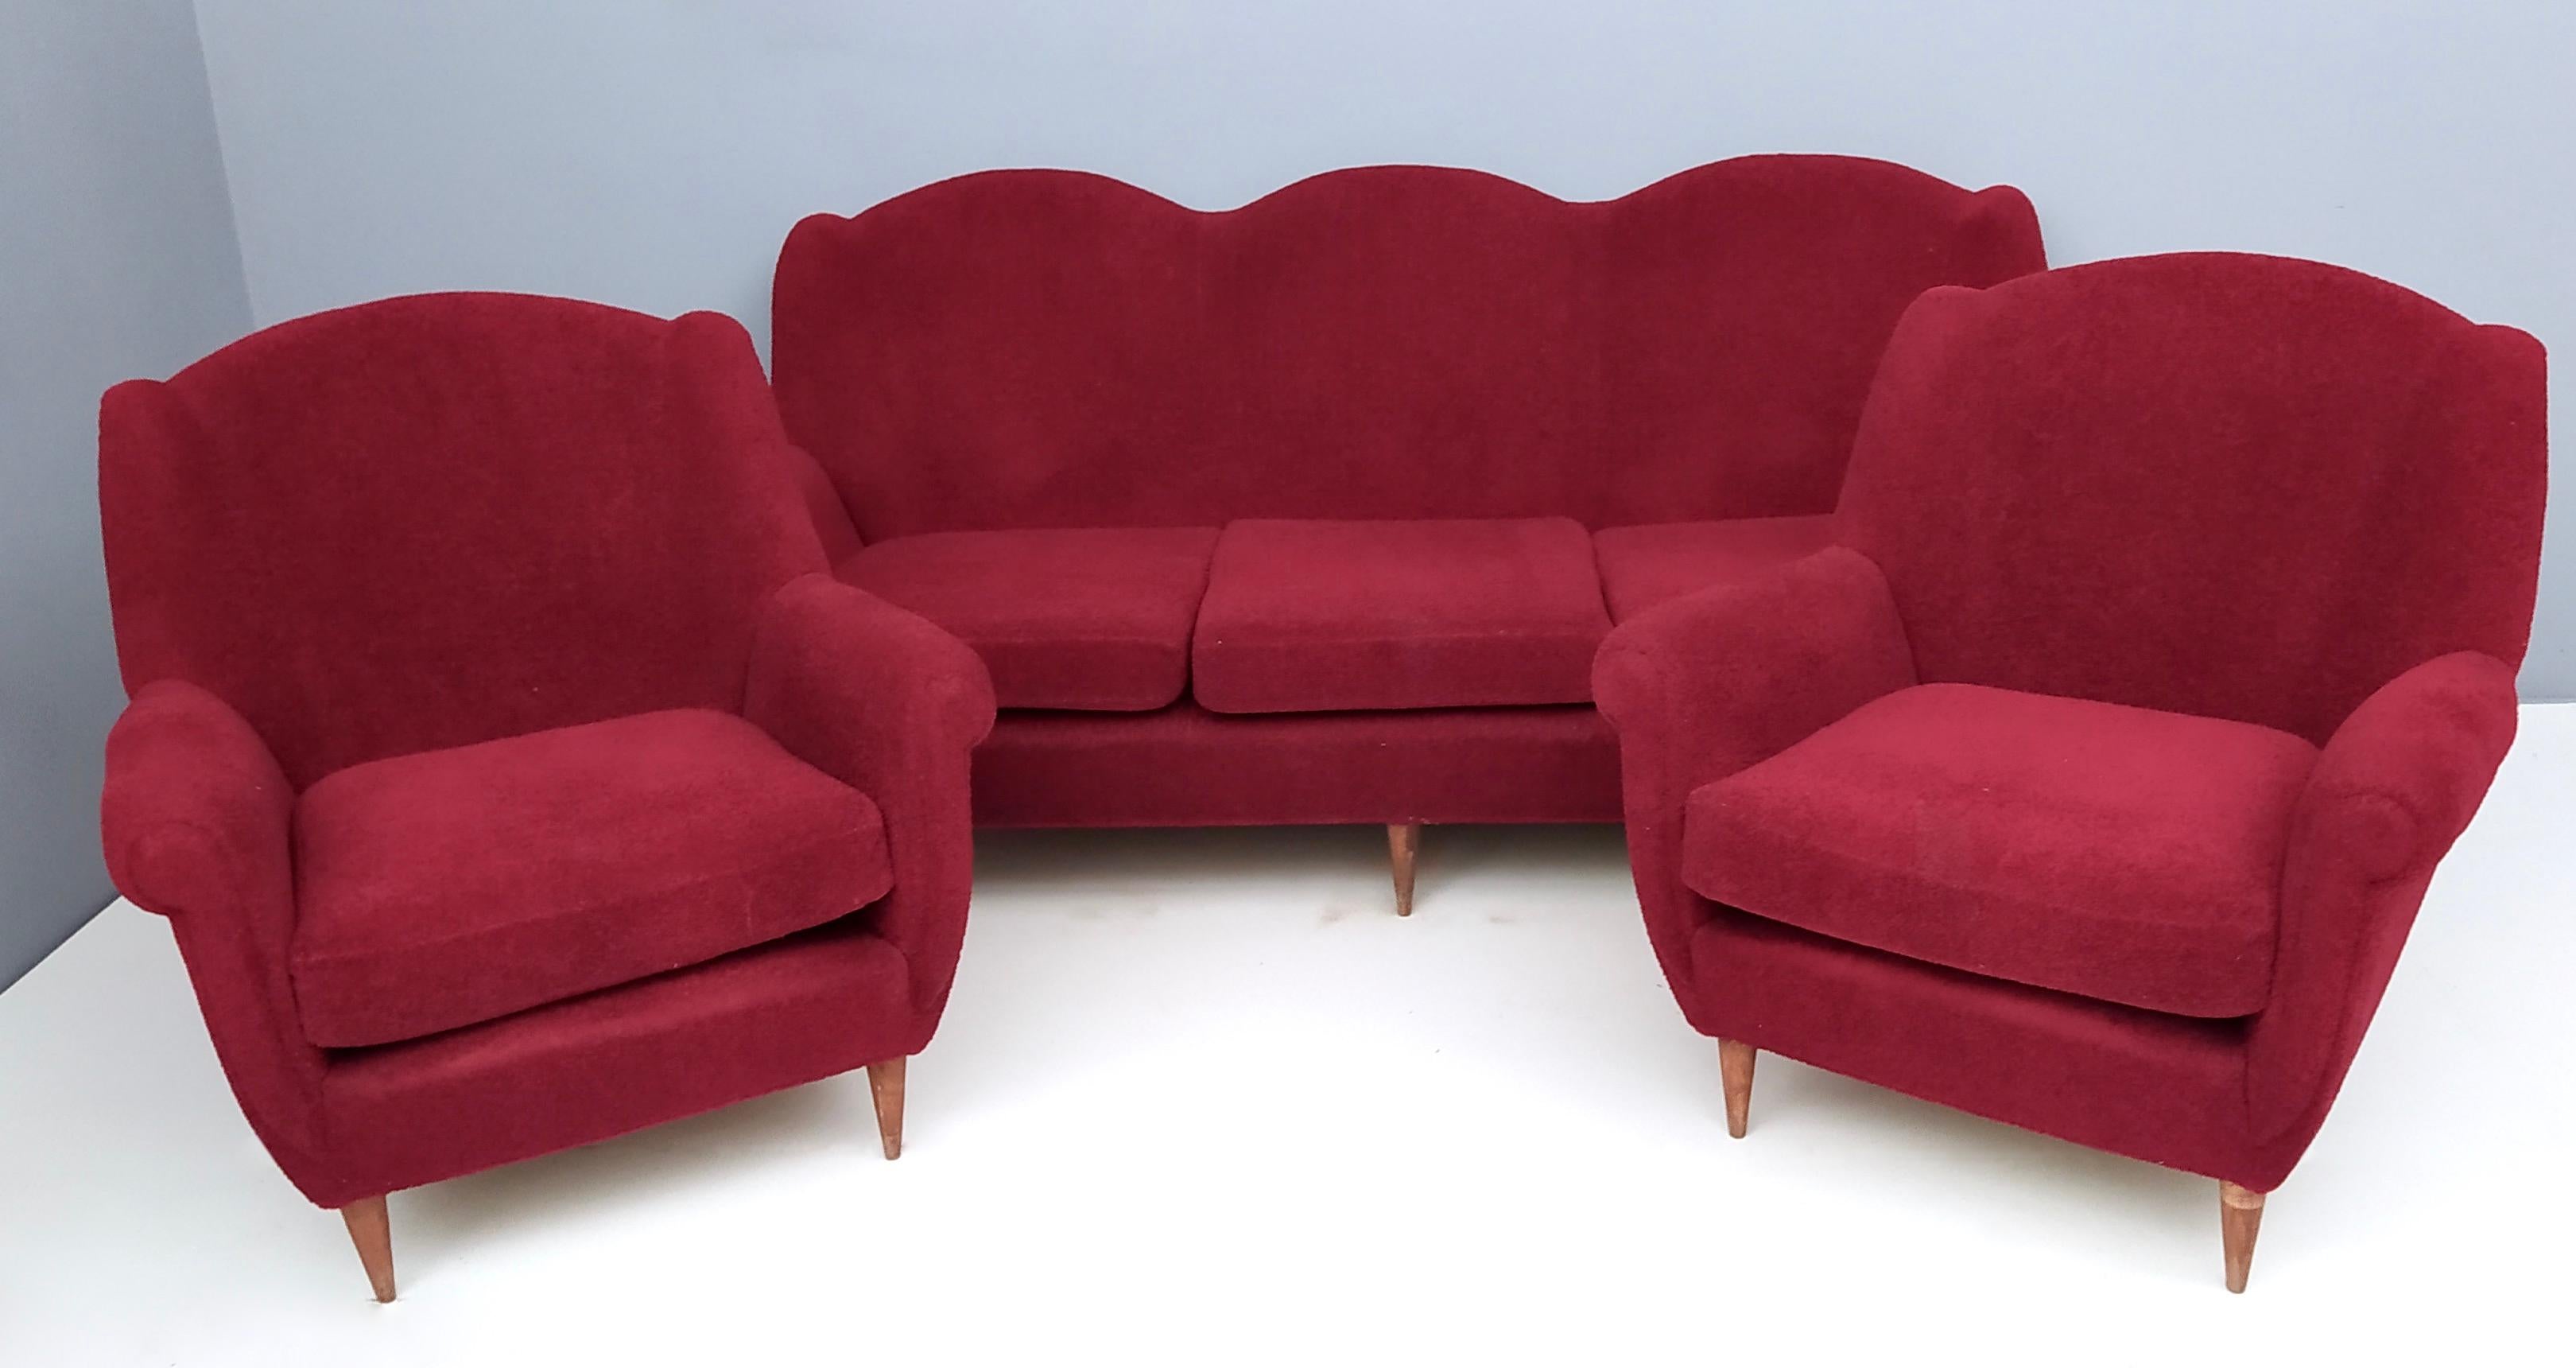 Mid-Century Modern Midcentury Crimson Sofa by Gigi Radice for Minotti, Italy, 1950s